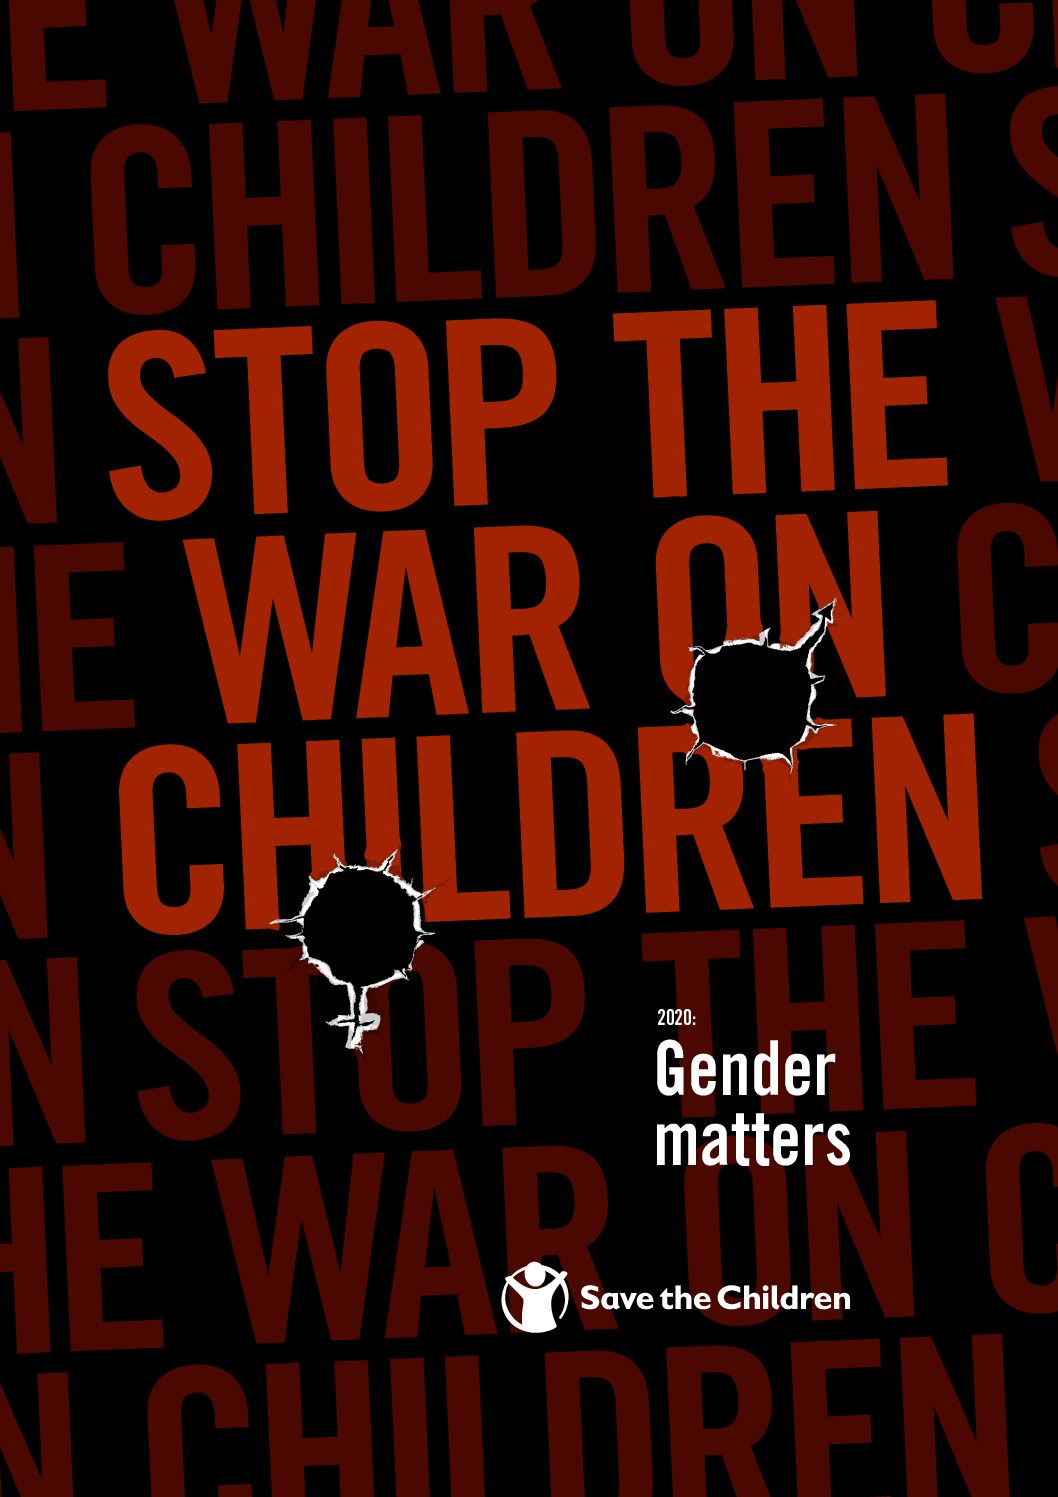 Stop the war on children